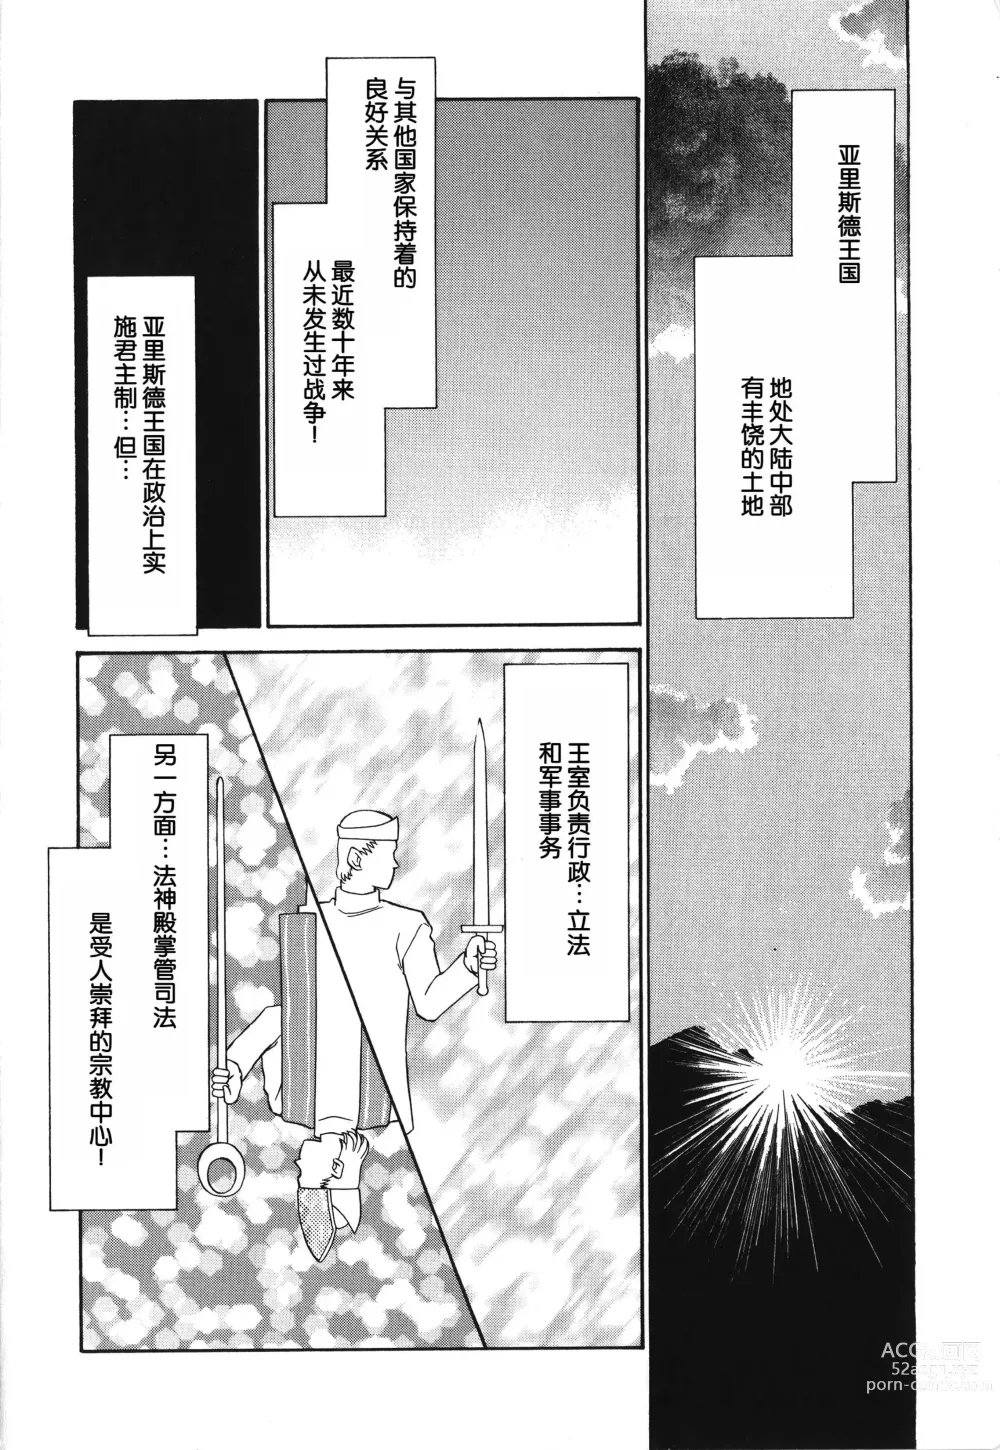 Page 10 of manga Bad Moon...